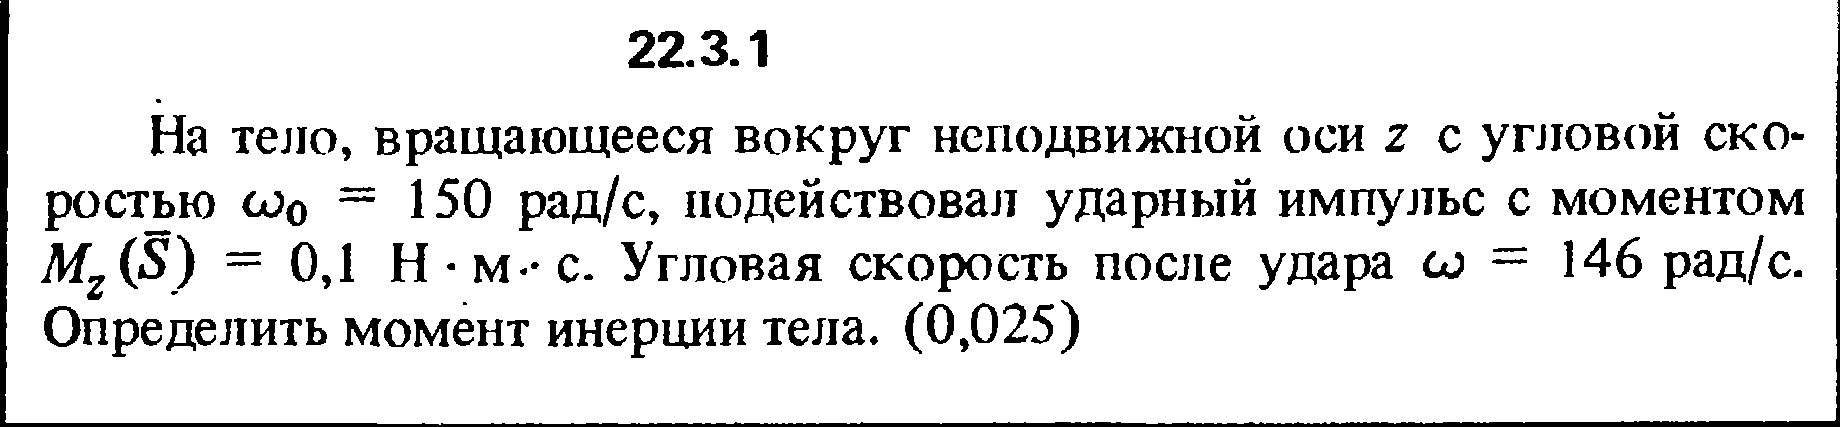 Решение 22.3.1 из сборника (решебника) Кепе О.Е. 1989